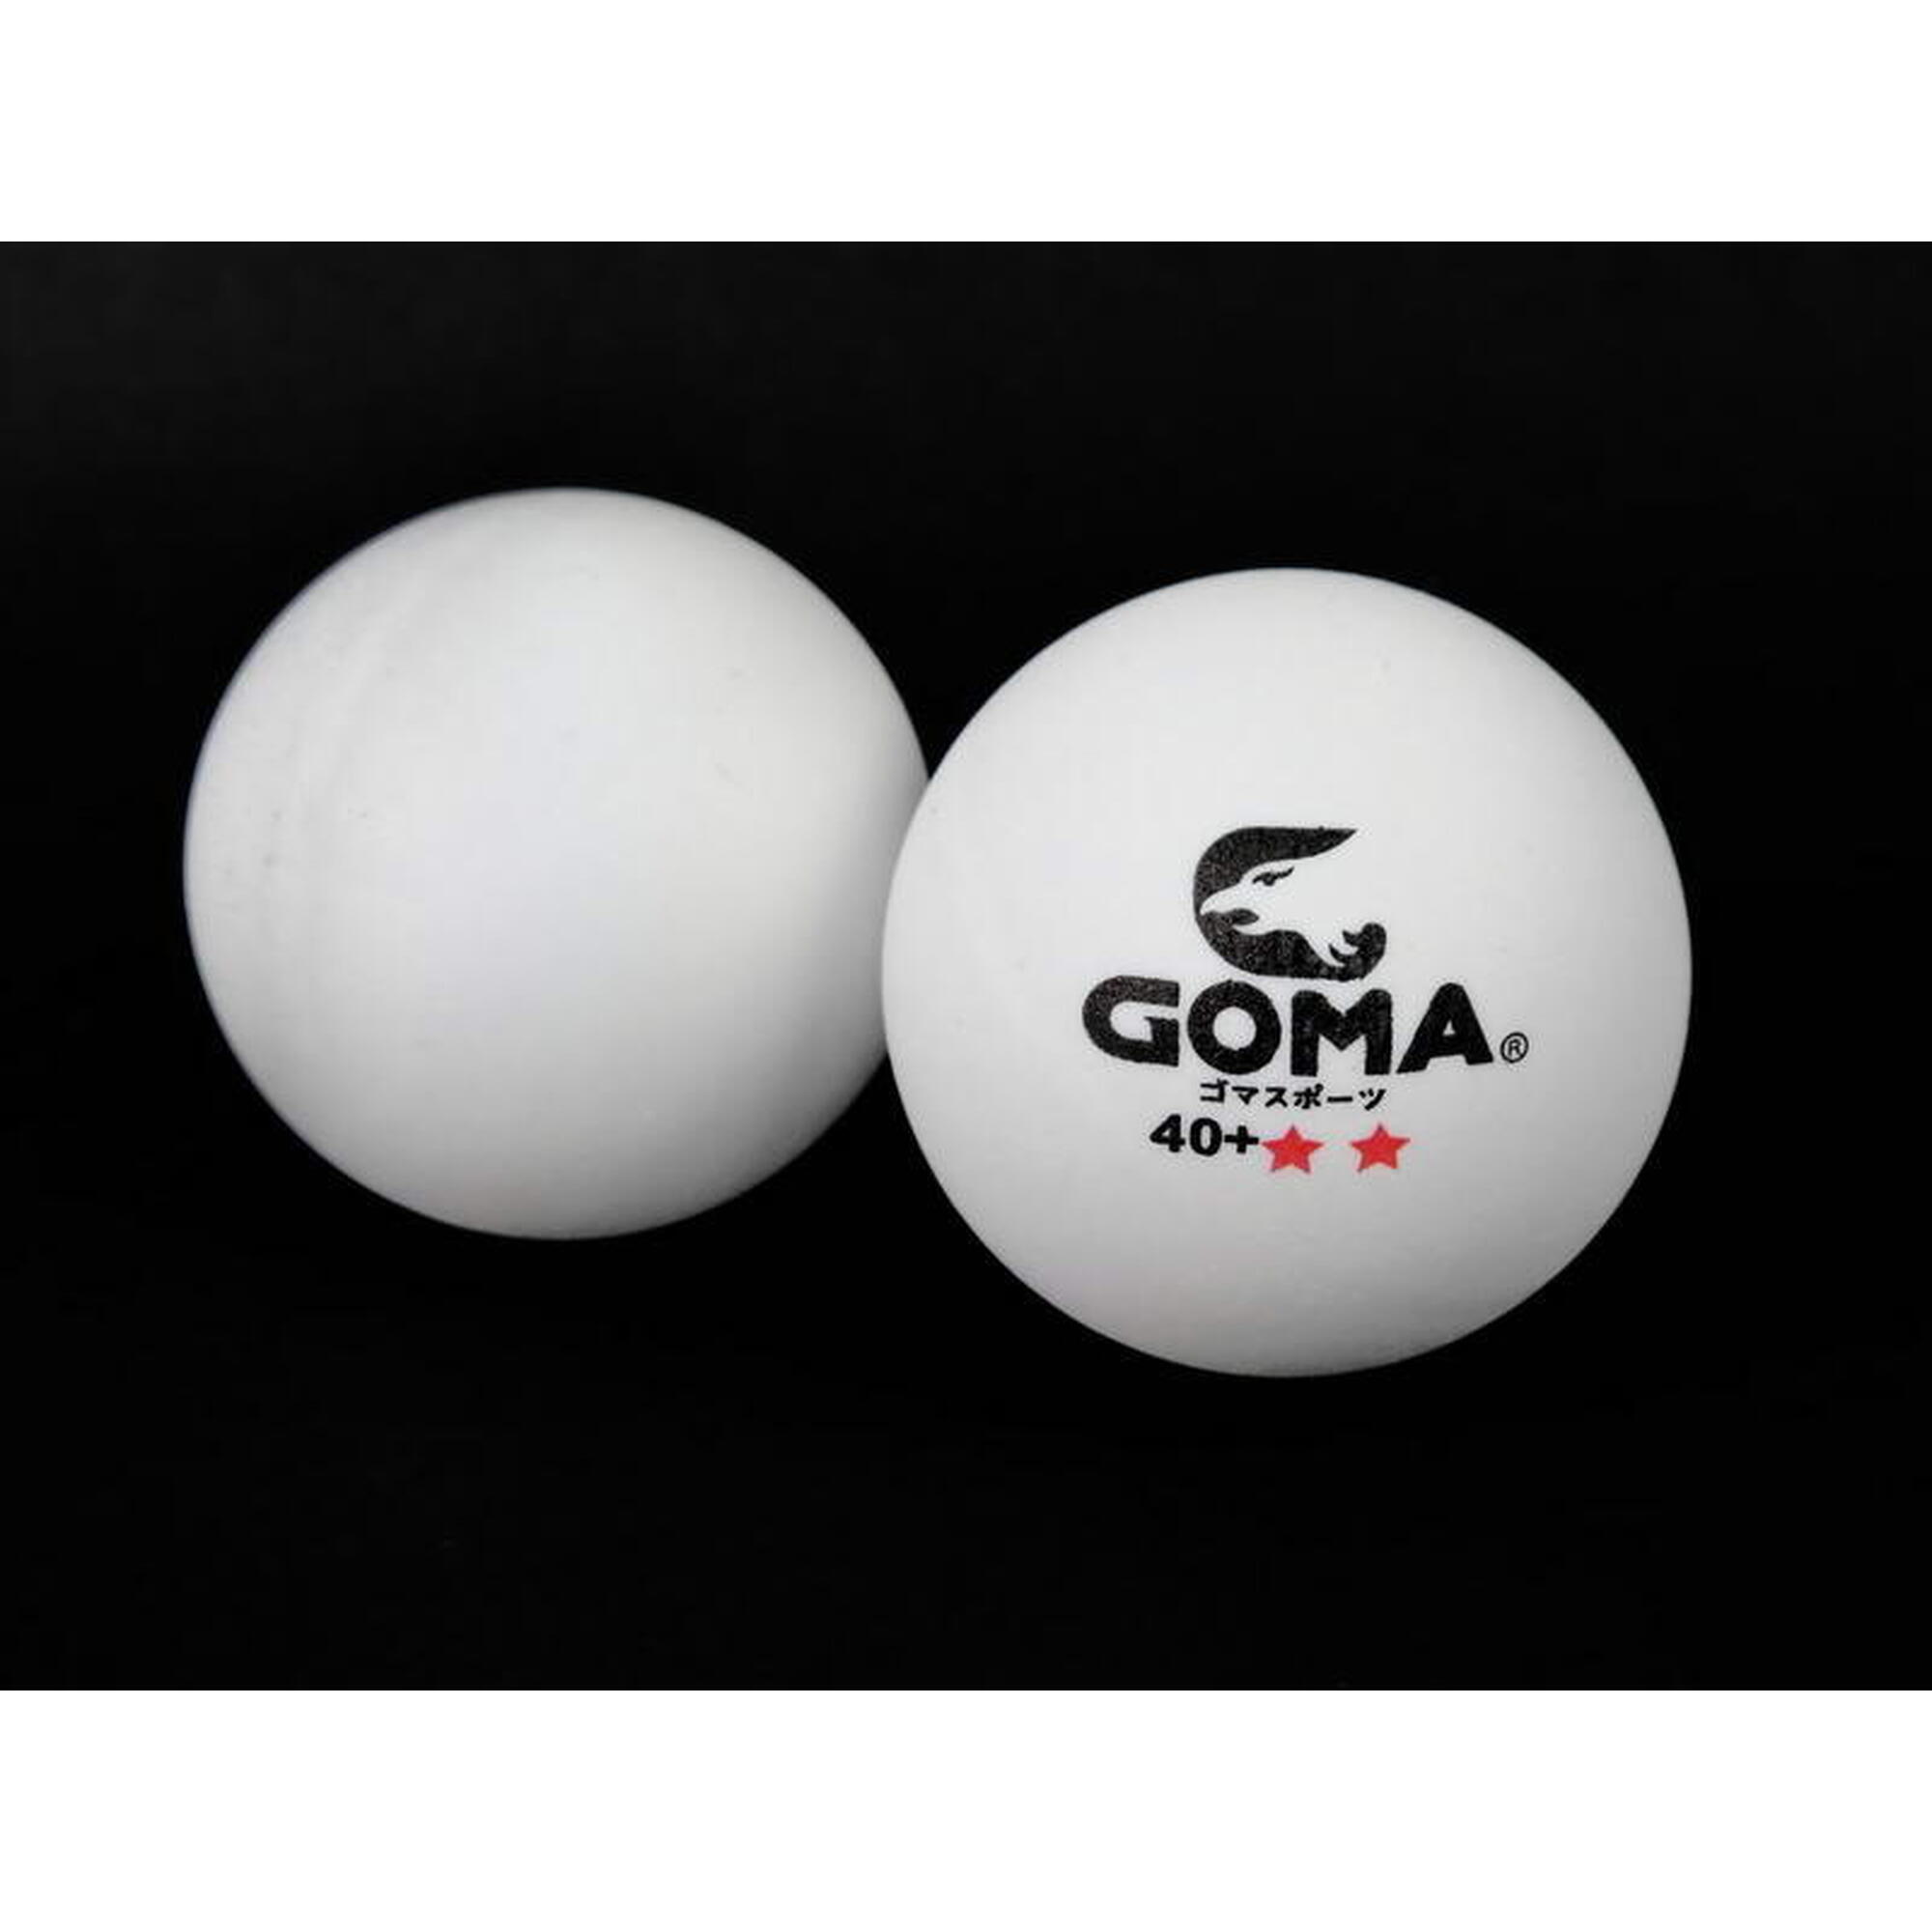 G402PY 2 Star 40+ Table Tennis Ball (6 pcs) - White